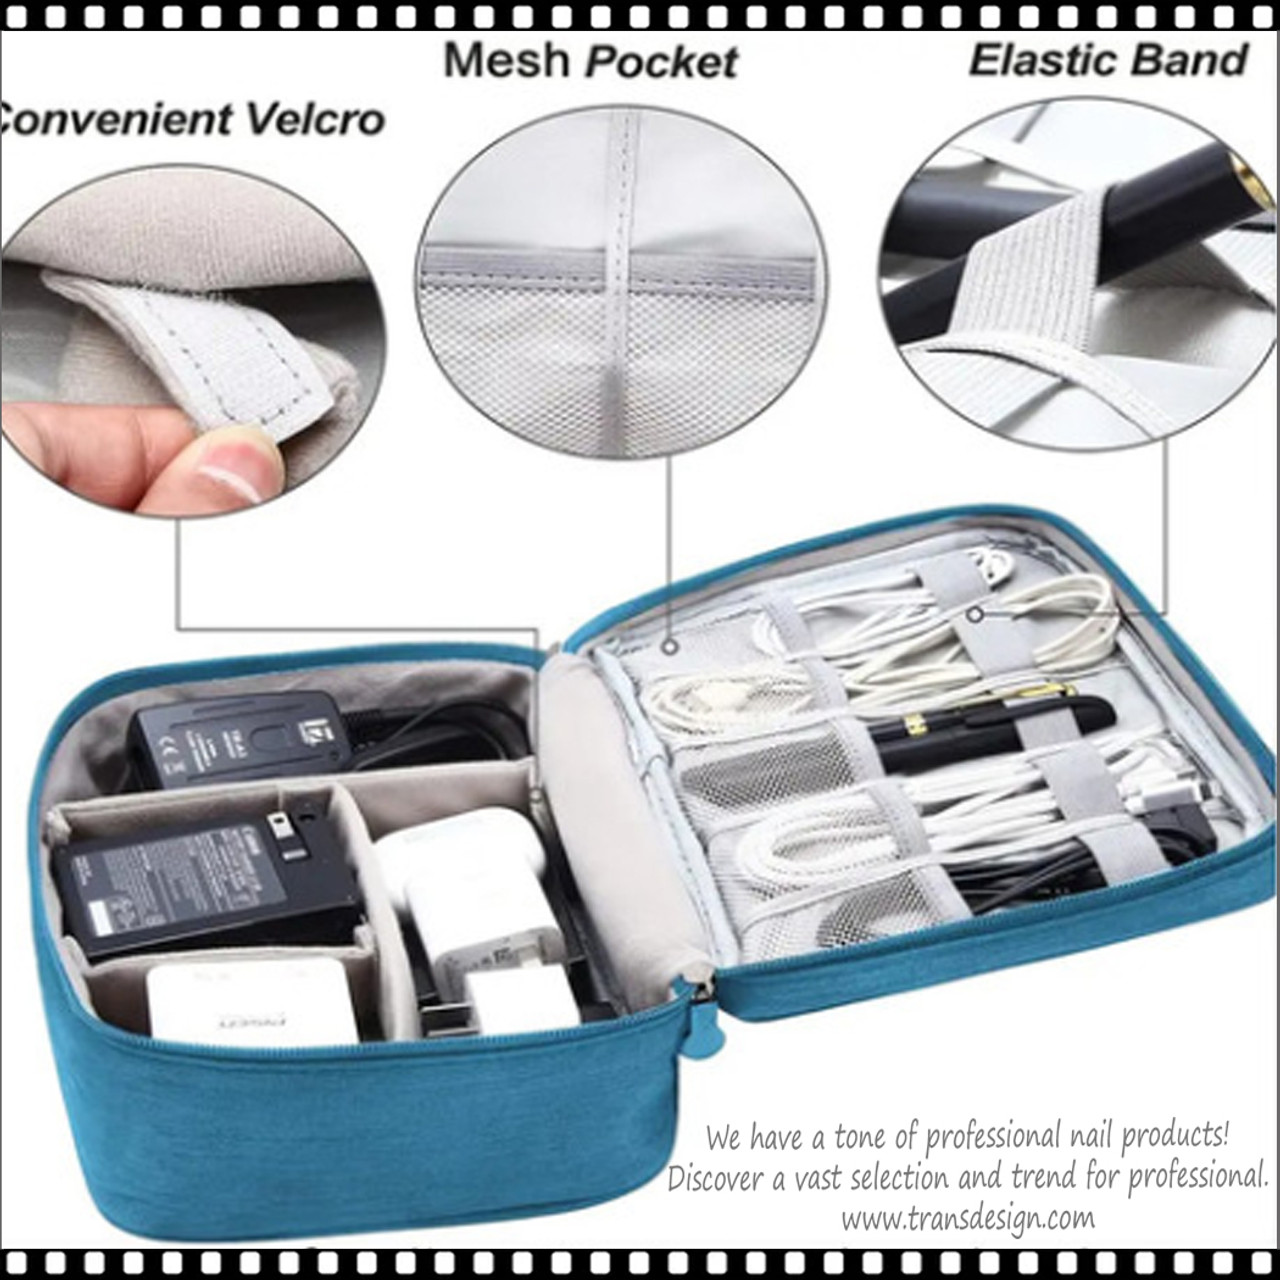 Water Resistant Travel Universal Cable Organizer Bag! - TDI, Inc